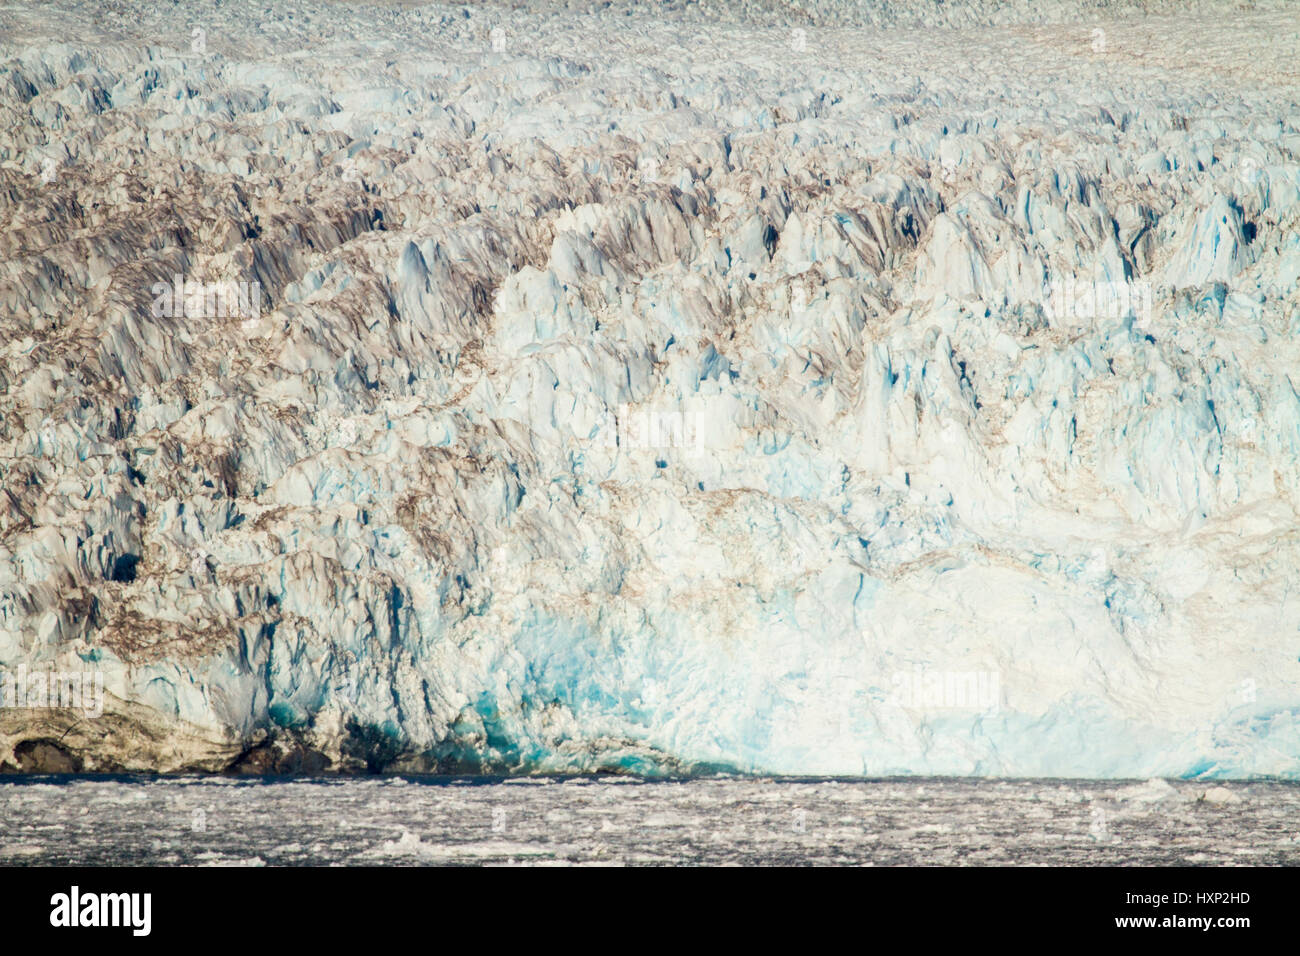 Chili - Amalia Glacier sur le bord du canal Sarmiento - Glacier Skua - Parc National Bernardo O'Higgins Banque D'Images